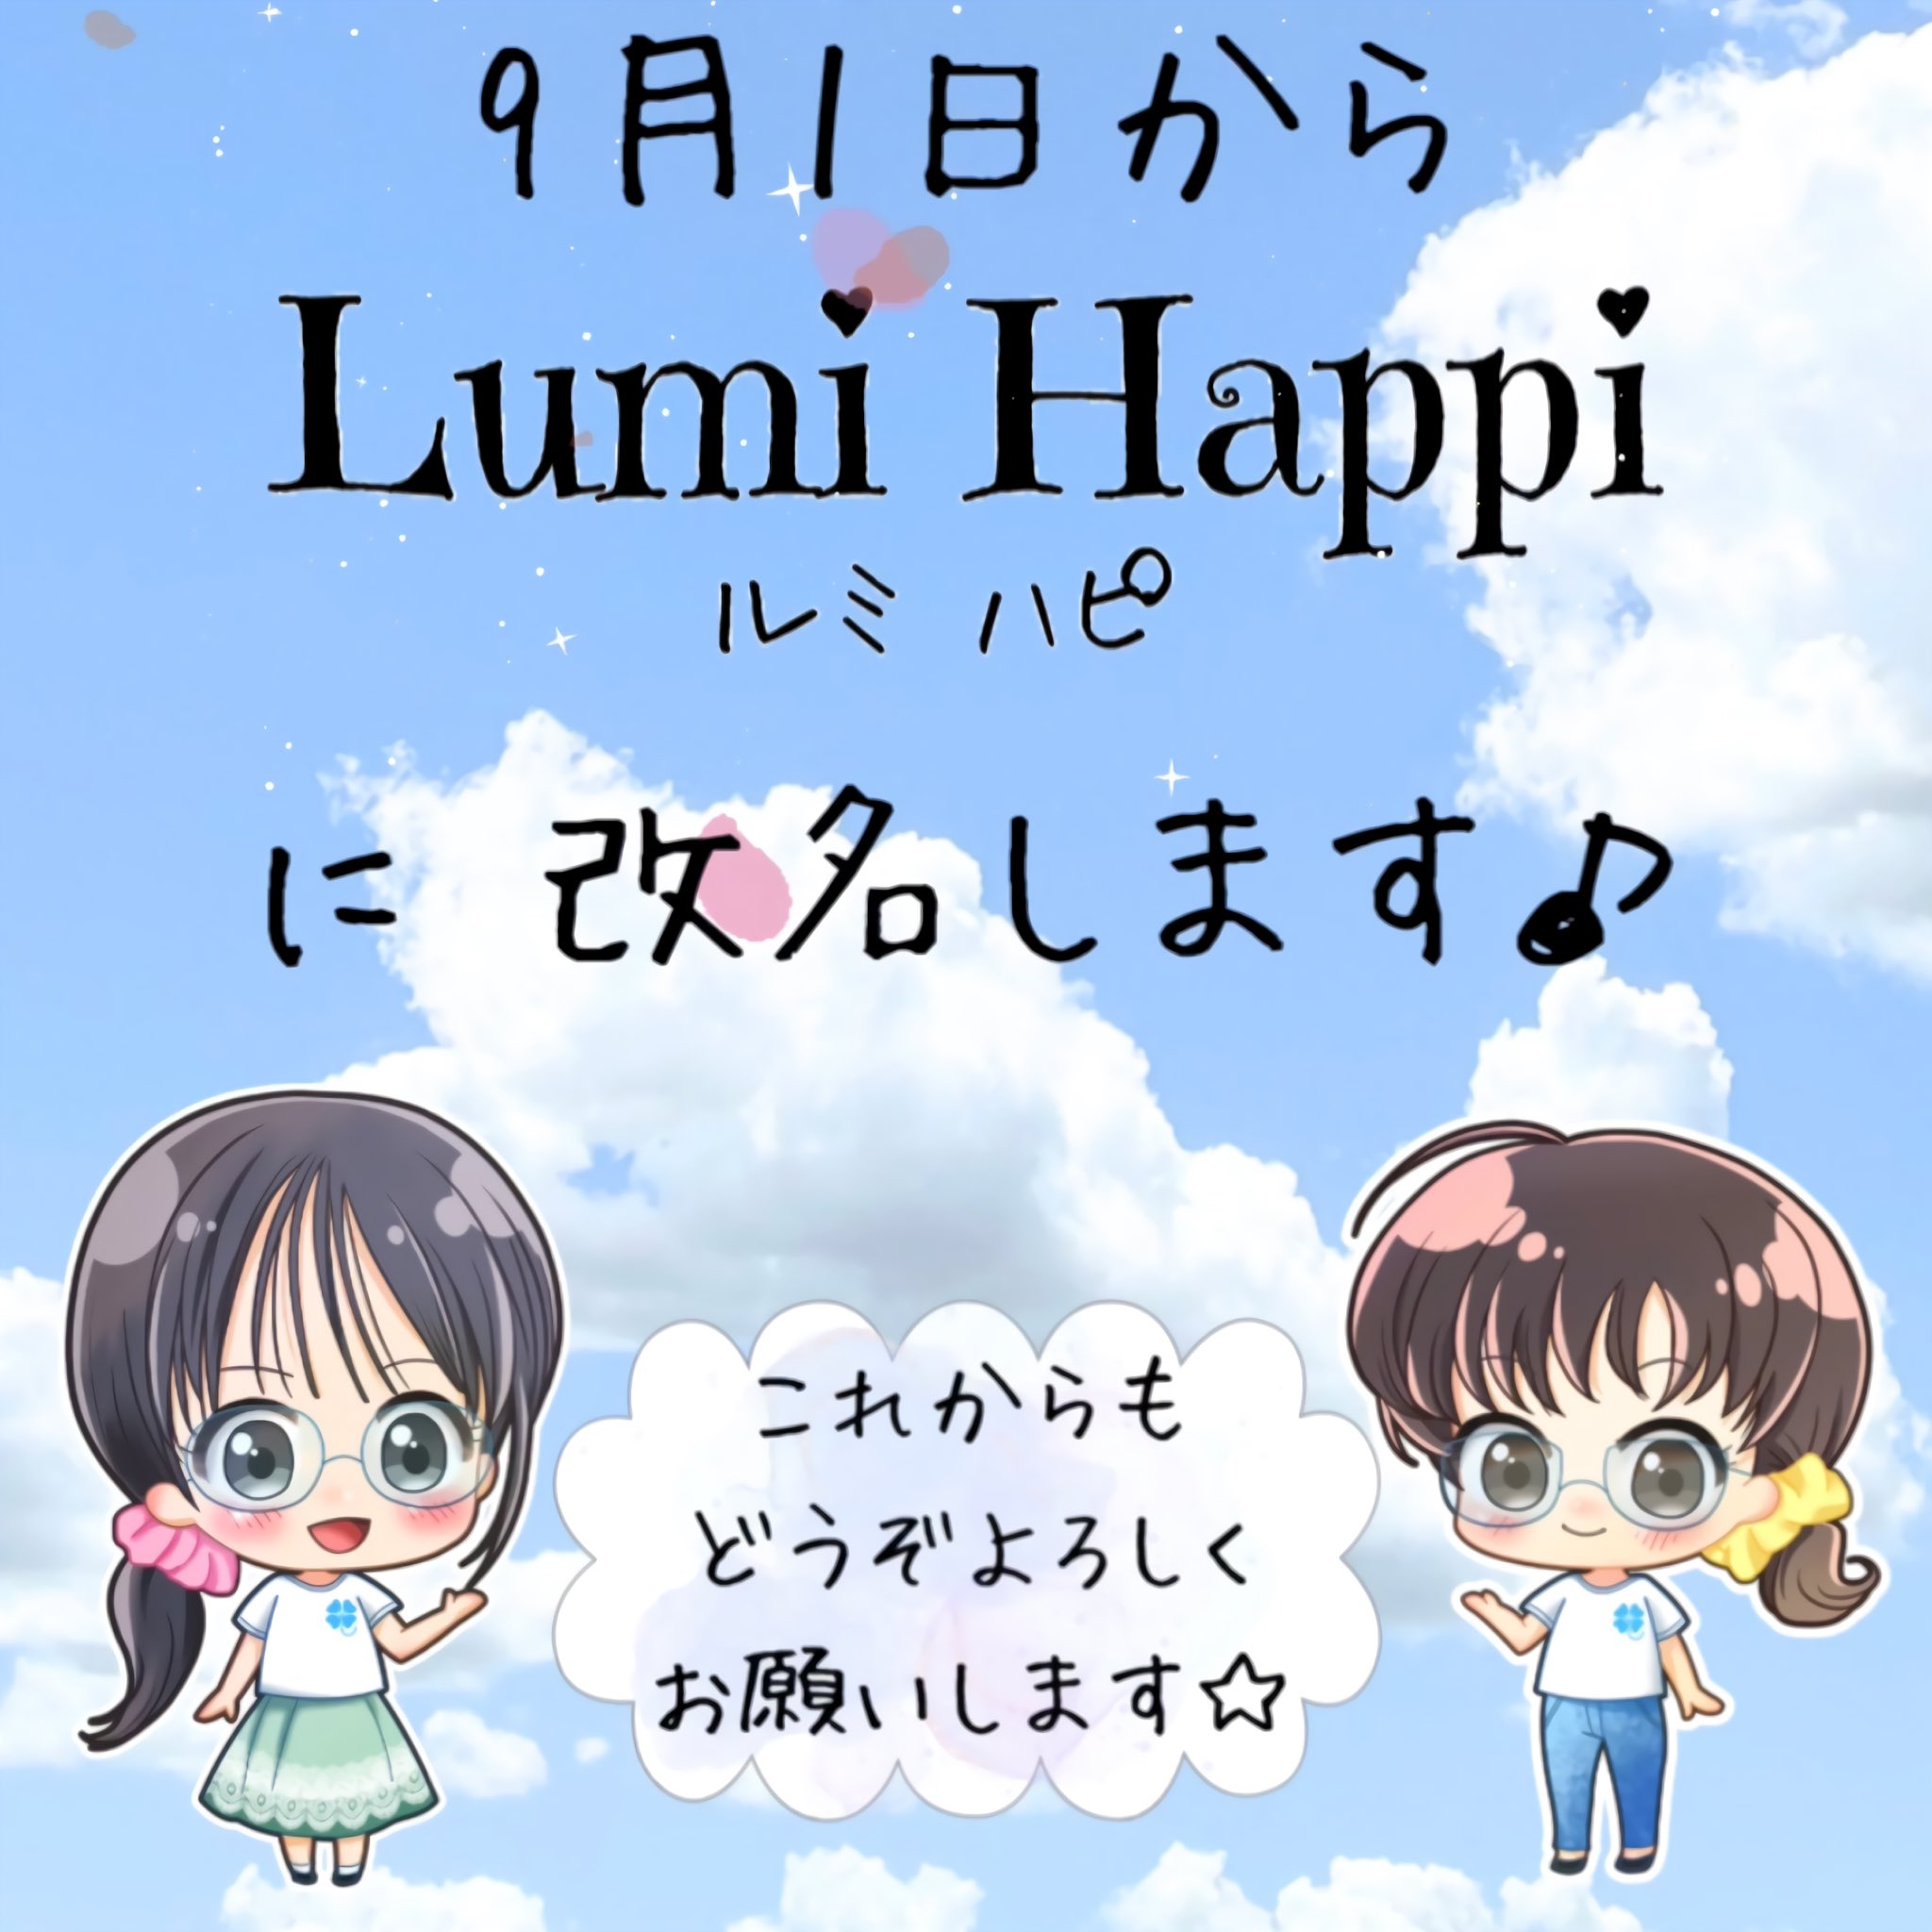 Aya🍀Lumi Happi(ﾙﾐ ﾊﾋﾟ) (@LumiHappi) / X